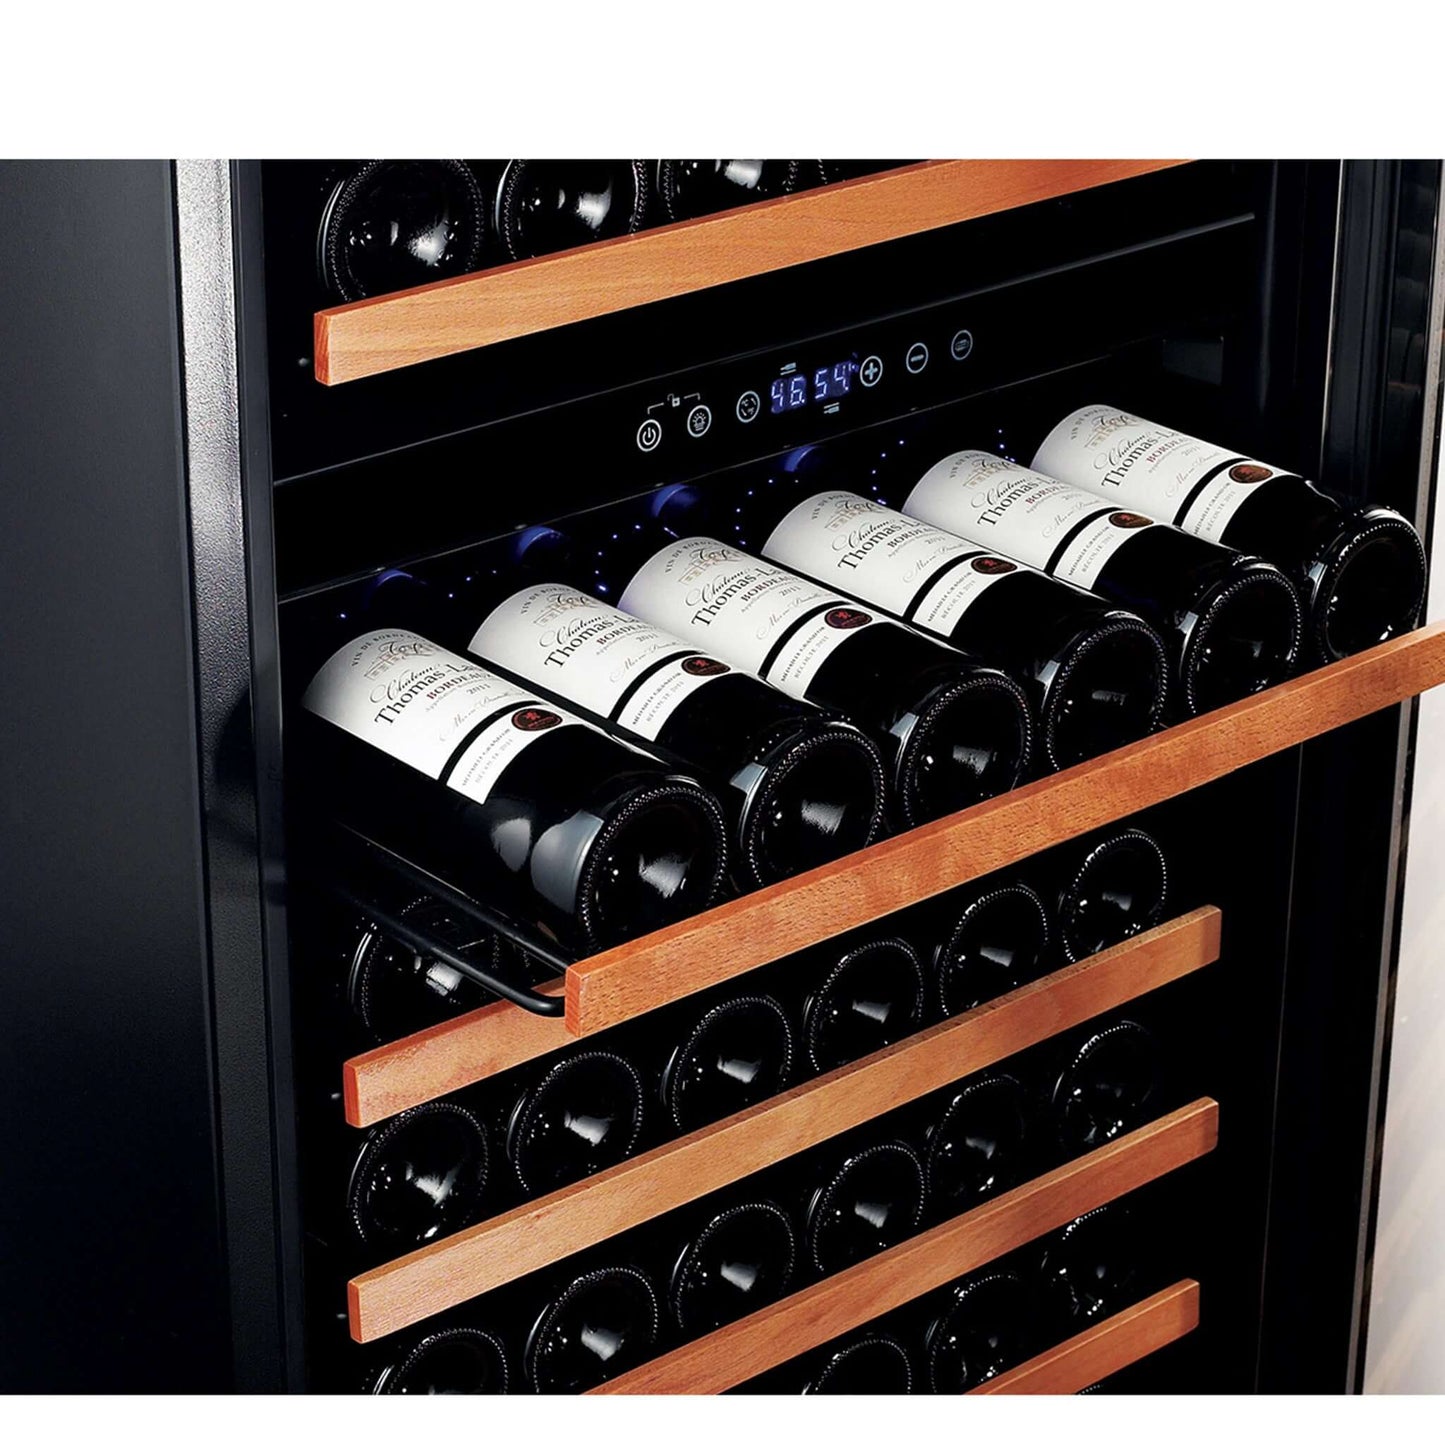 Smith & Hanks 166 Bottle Dual Zone Stainless Steel Wine Refrigerator